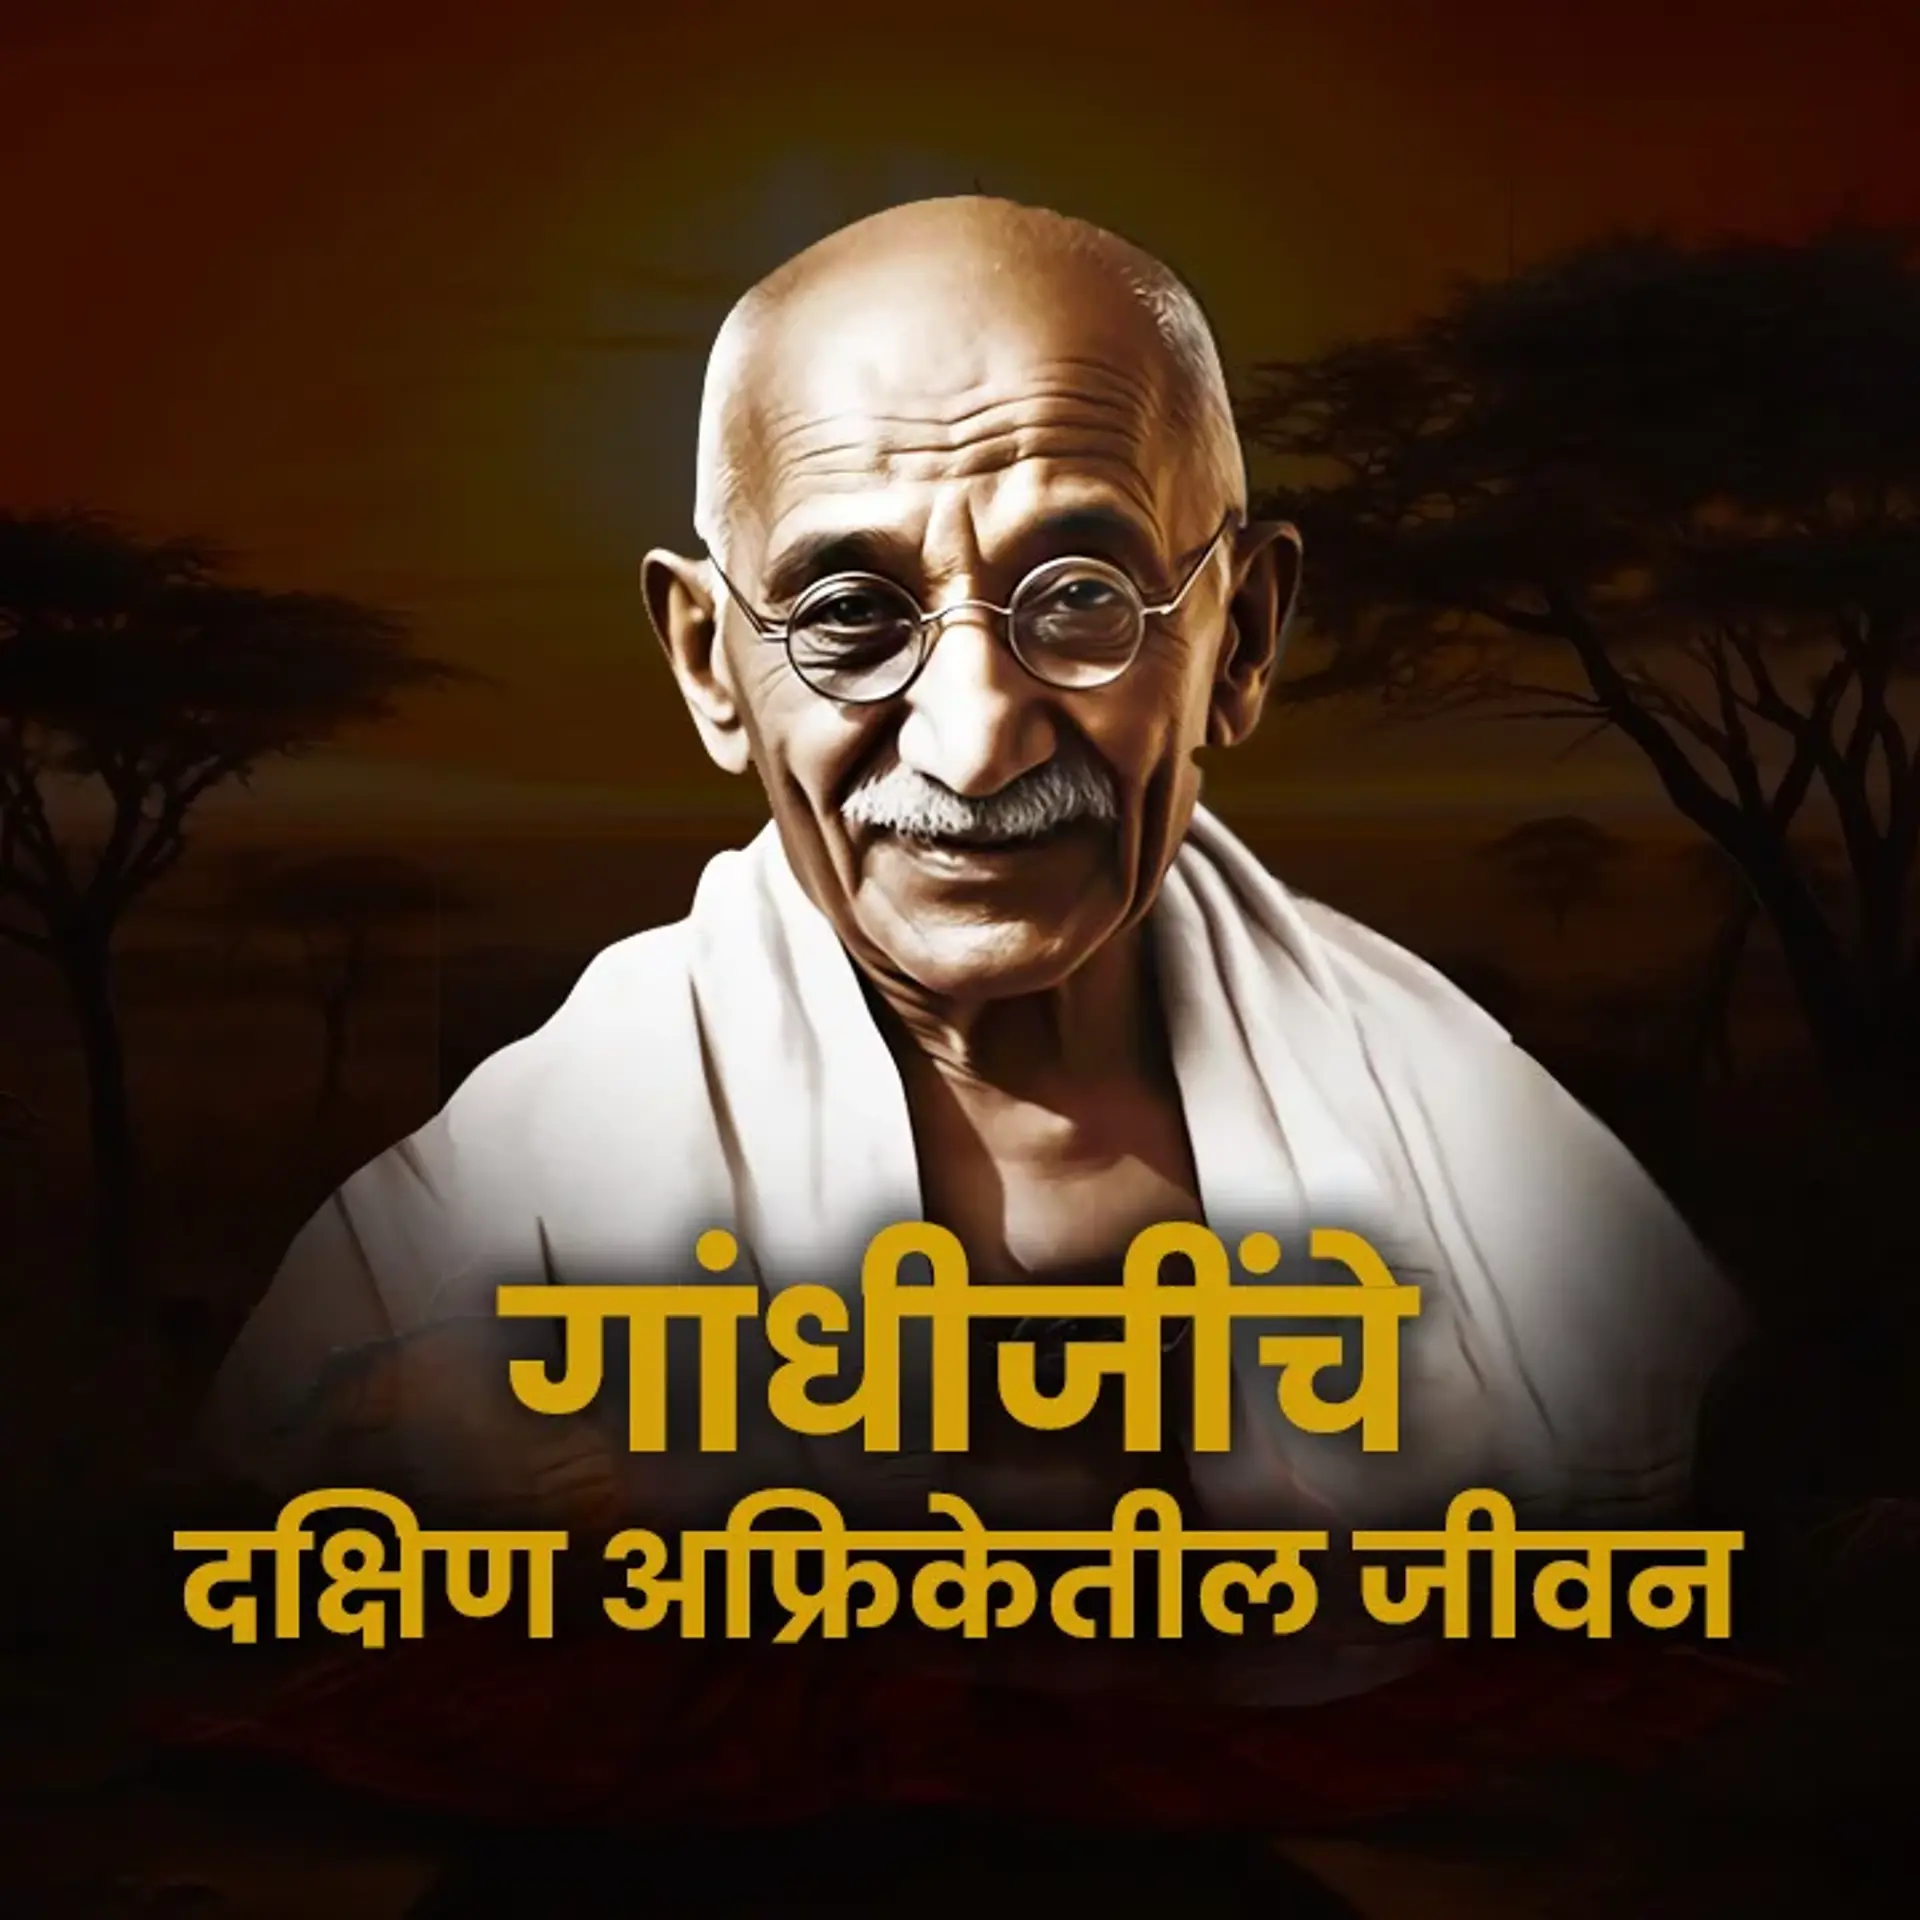 4. Gandhijincha Prachar